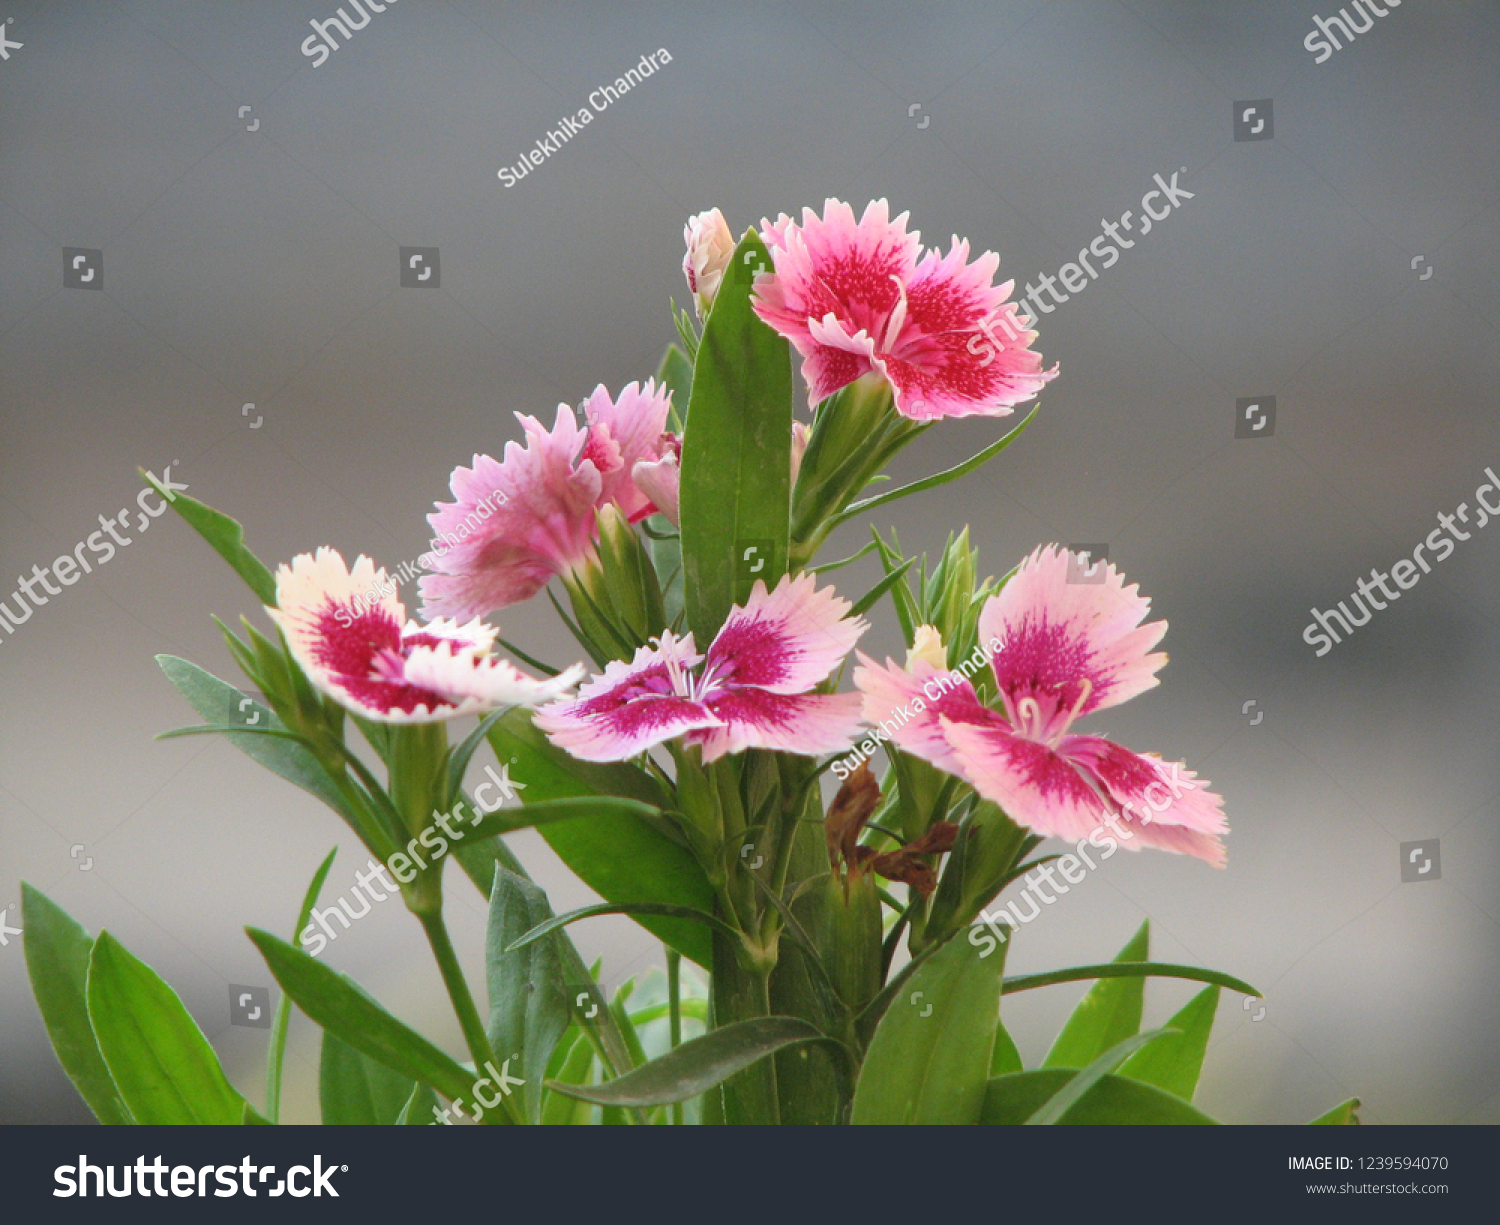 Flowers That Look Like Pencil Shavings Stock Photo Edit Now